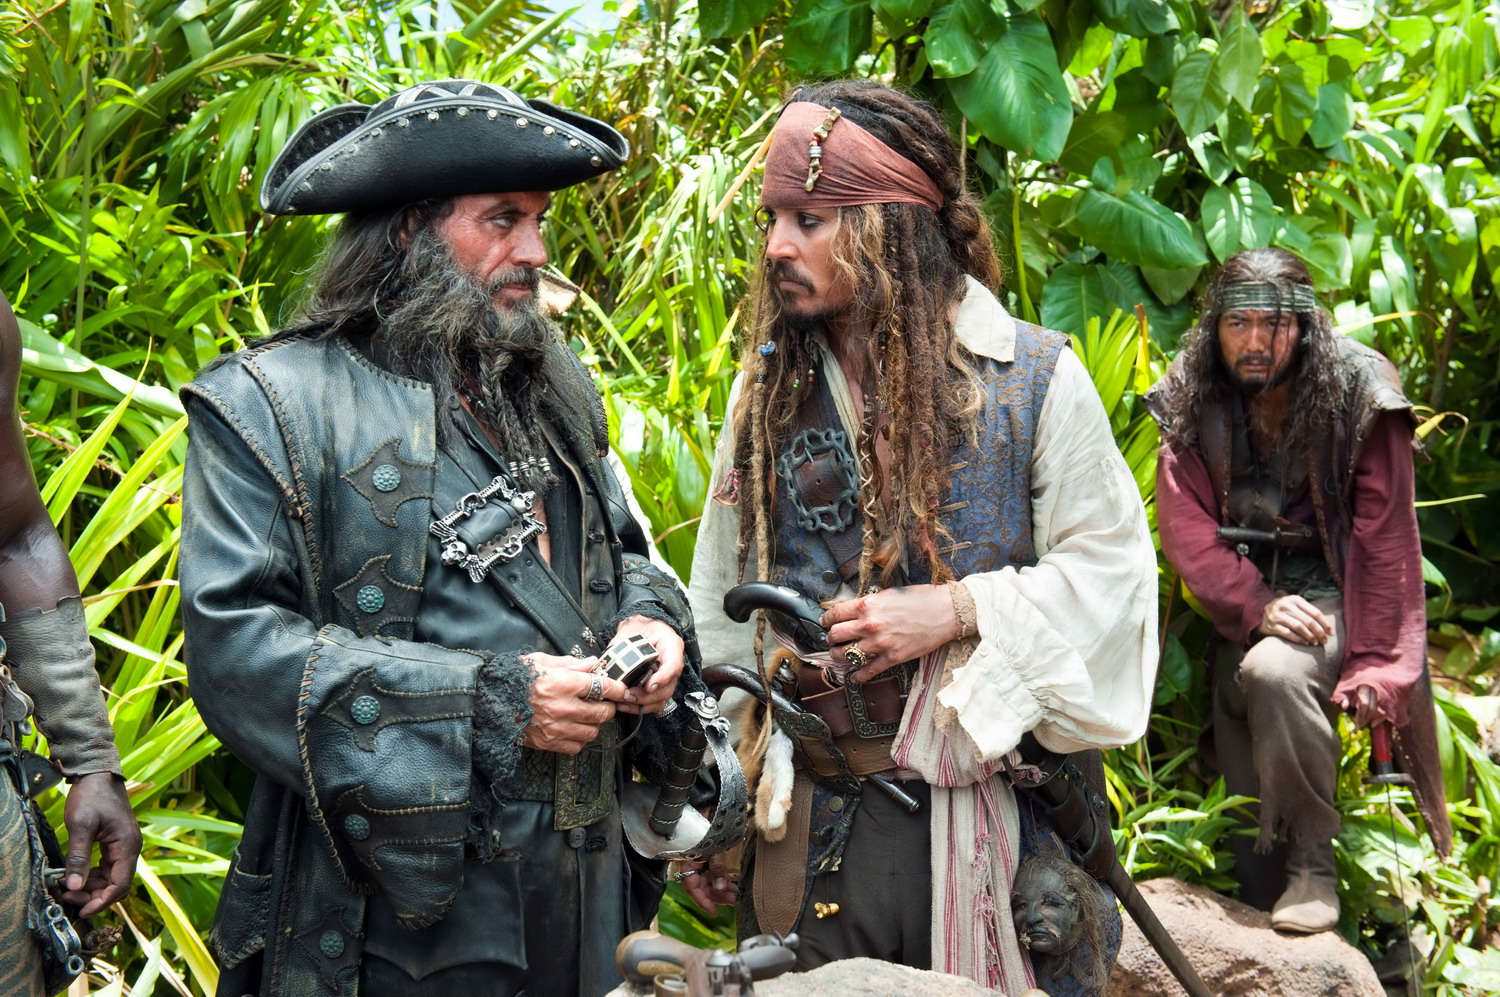 Blackbeard (Ian McShane) and Captain Jack Sparrow (Johnny Depp) in Pirates of the Caribbean: On Stranger Tides (2011)